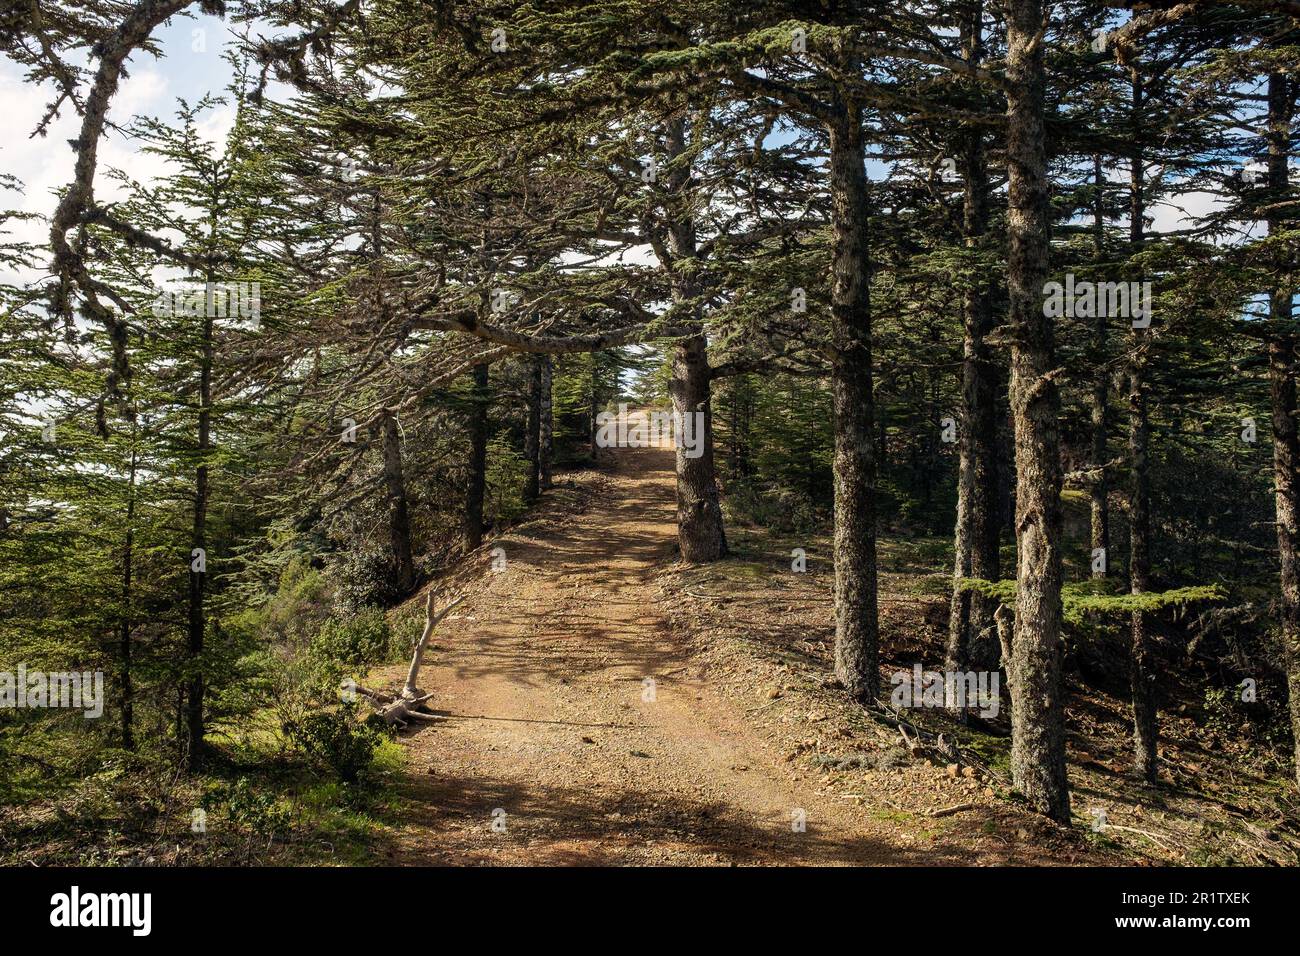 Tripylos trail, Mount Tripylos, Pafos (Paphos) Forest, Cyprus Stock Photo